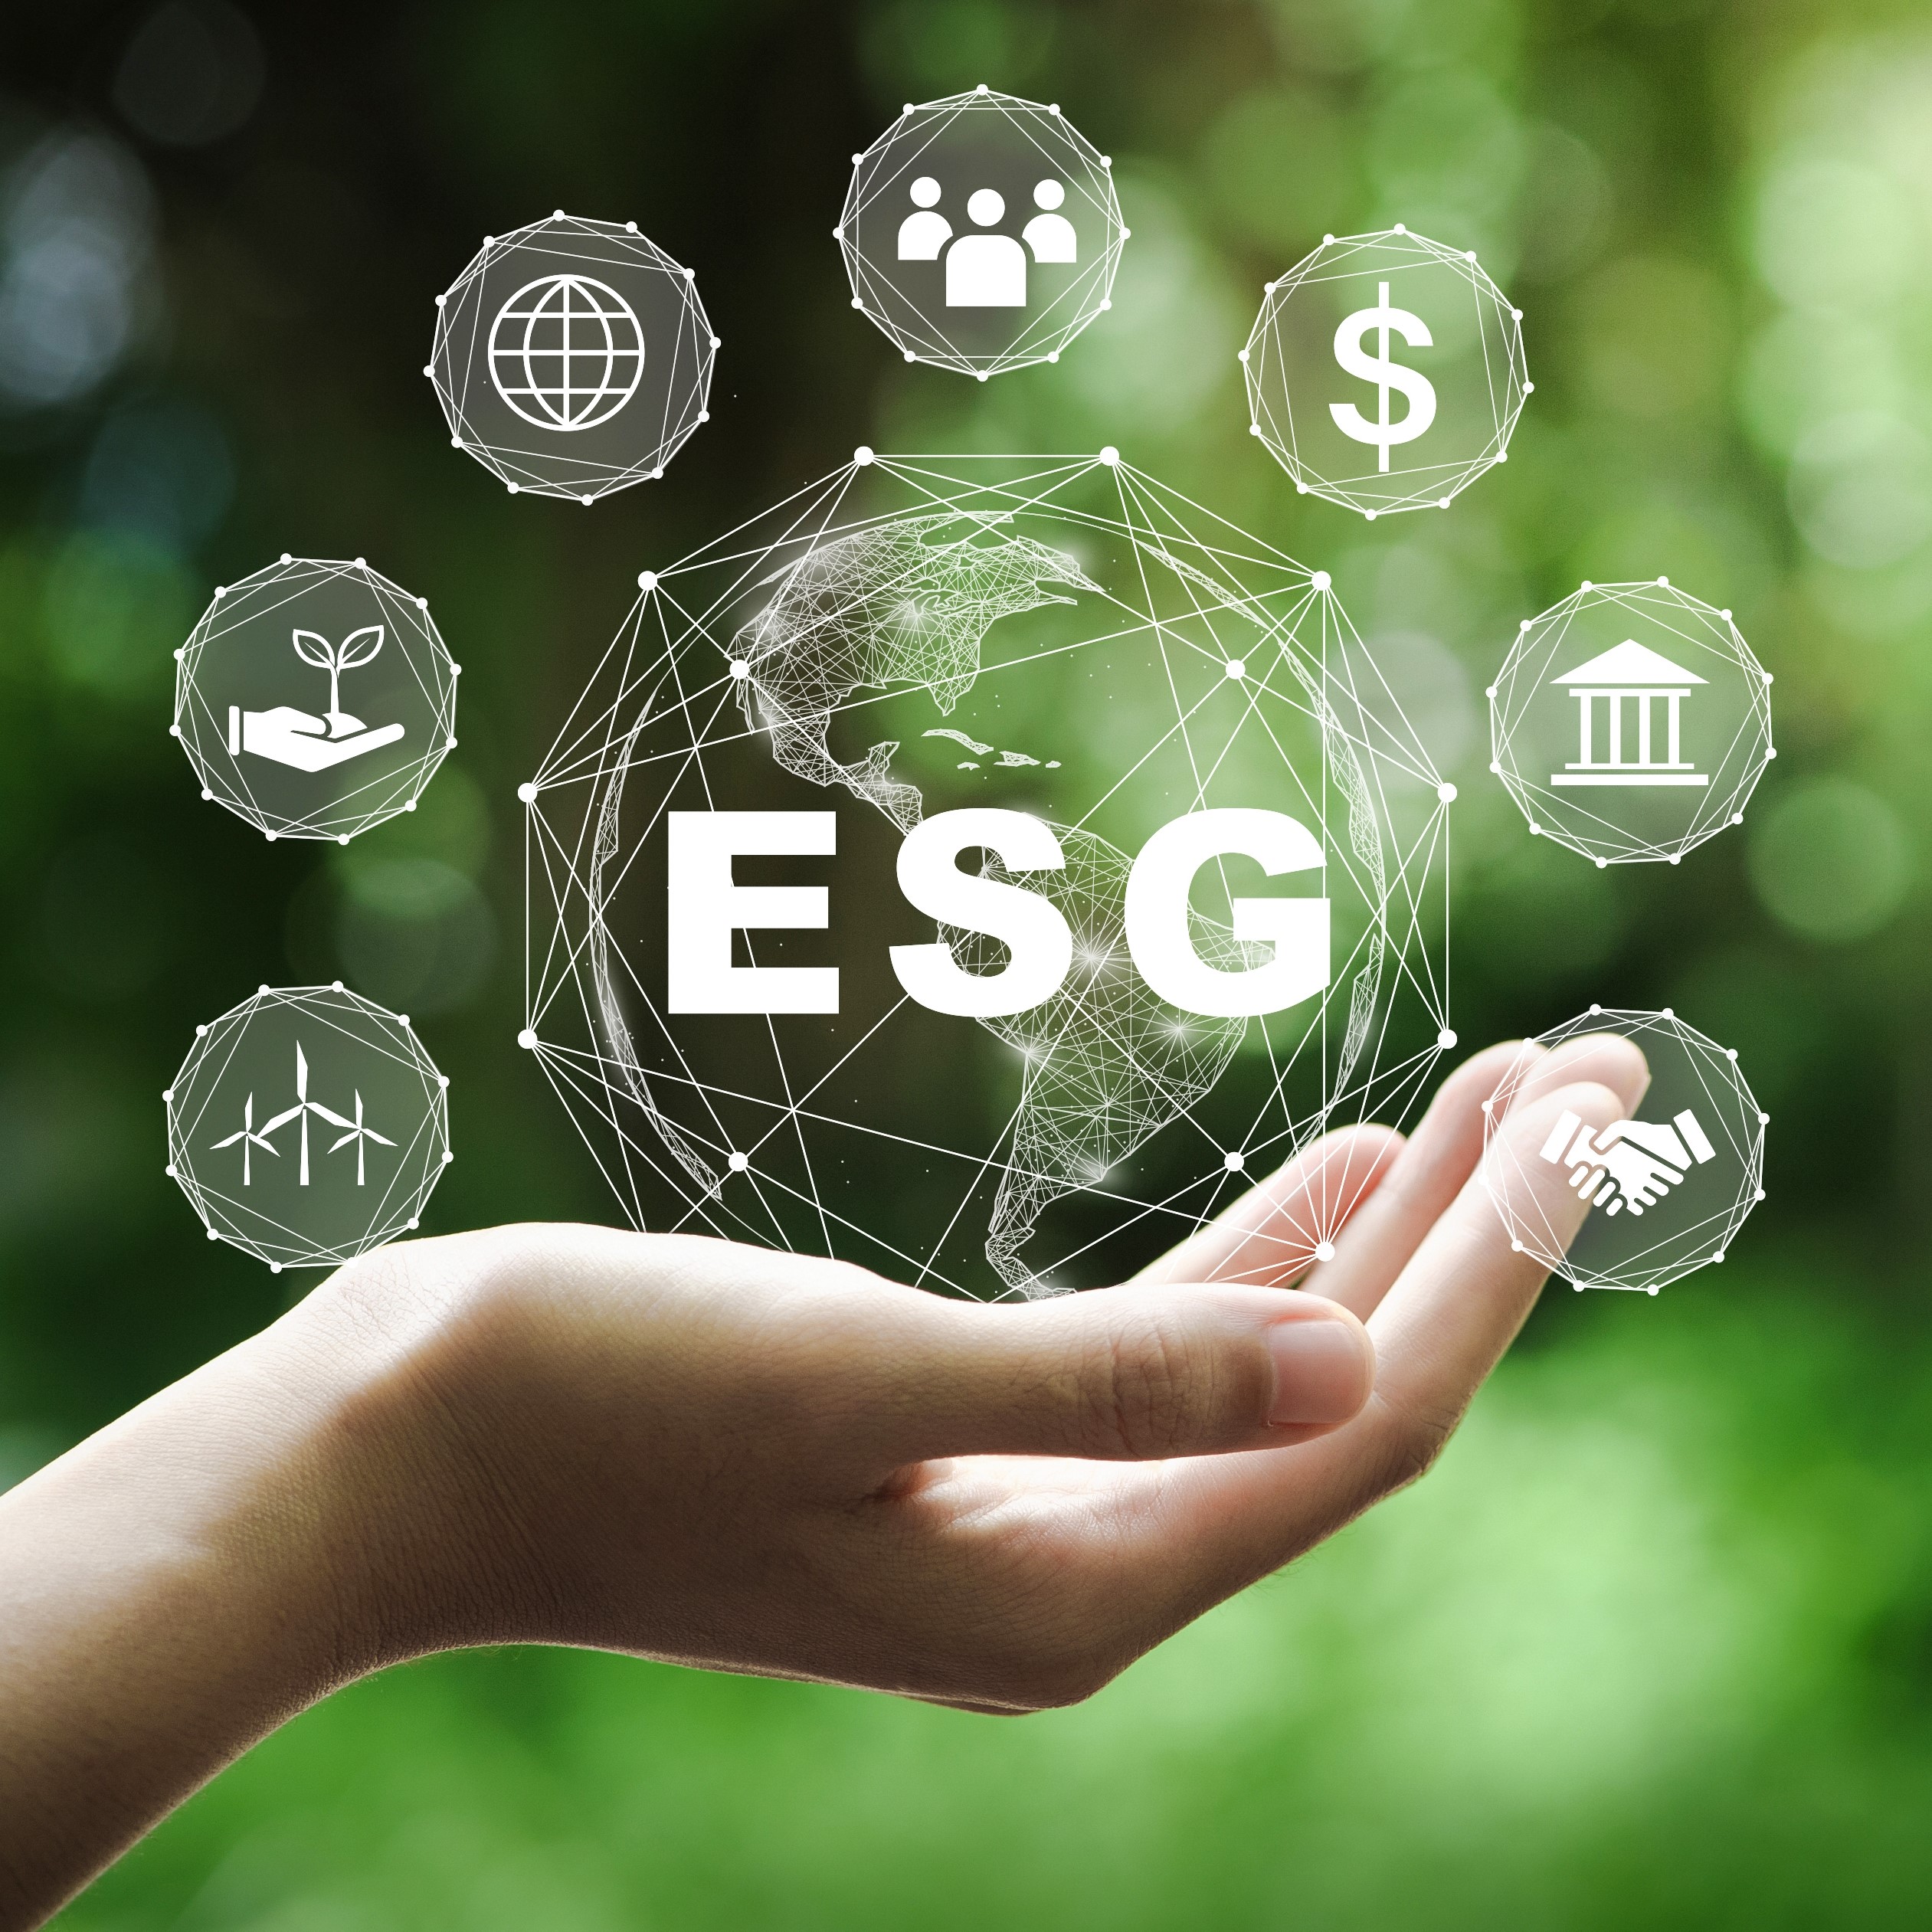 Real-time ESG data drives progress